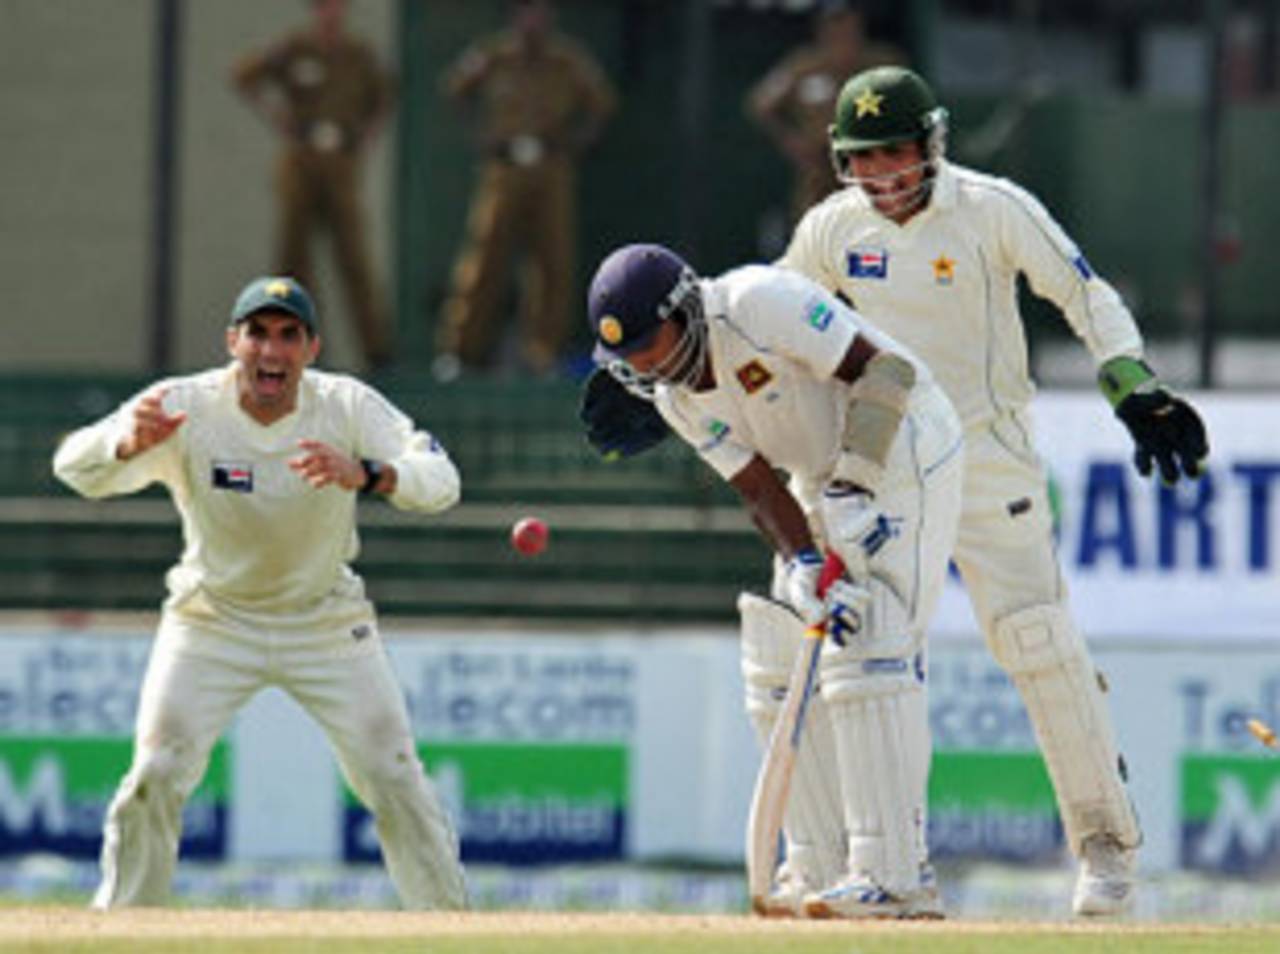 Mahela Jayawardene is bowled by Danish Kaneria, Sri Lanka v Pakistan, 3rd Test, 2nd day, Colombo, July 21, 2009 